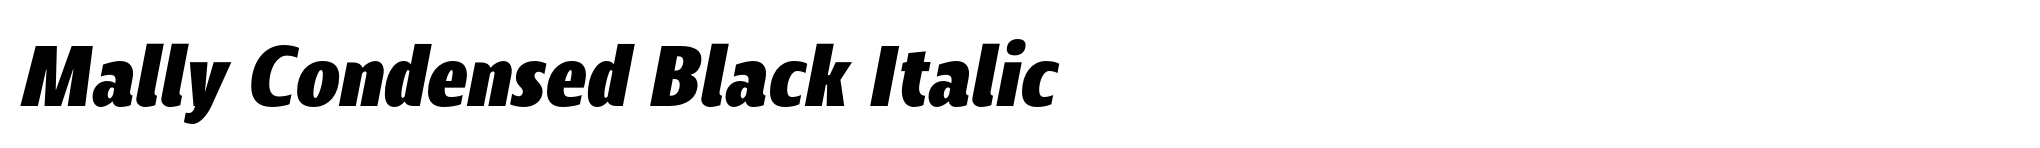 Mally Condensed Black Italic image